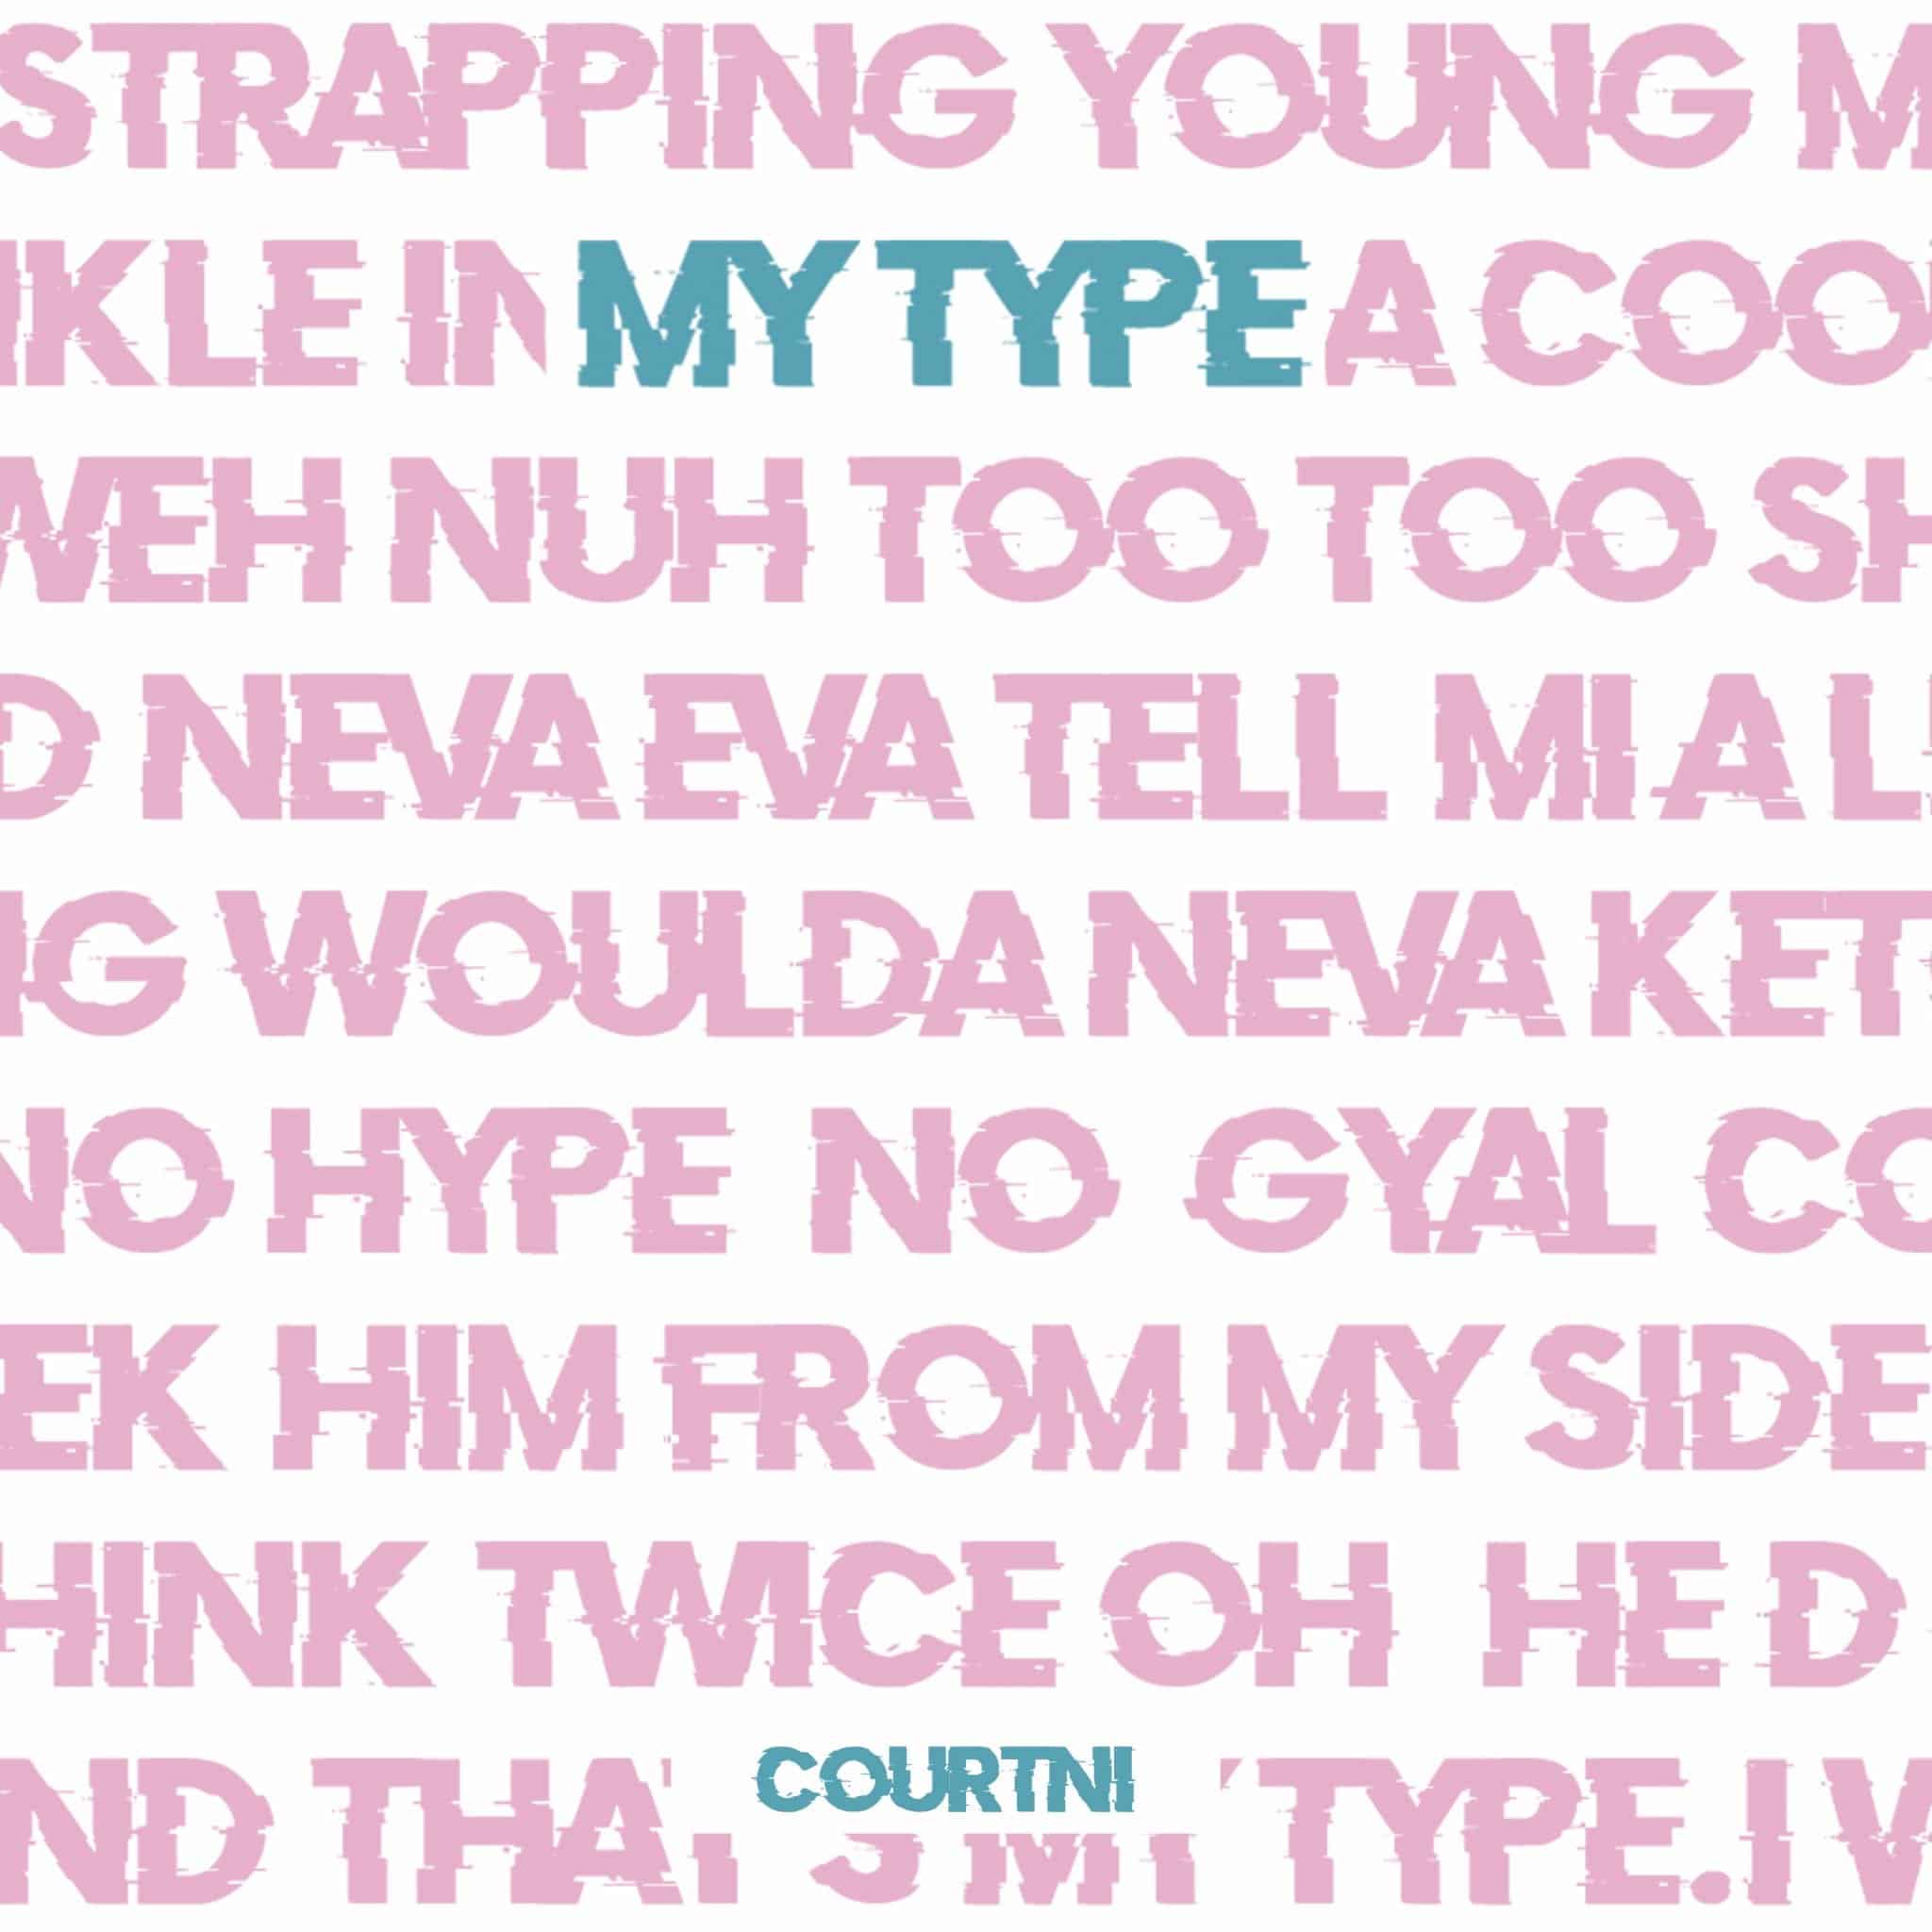 Courtni - My Type